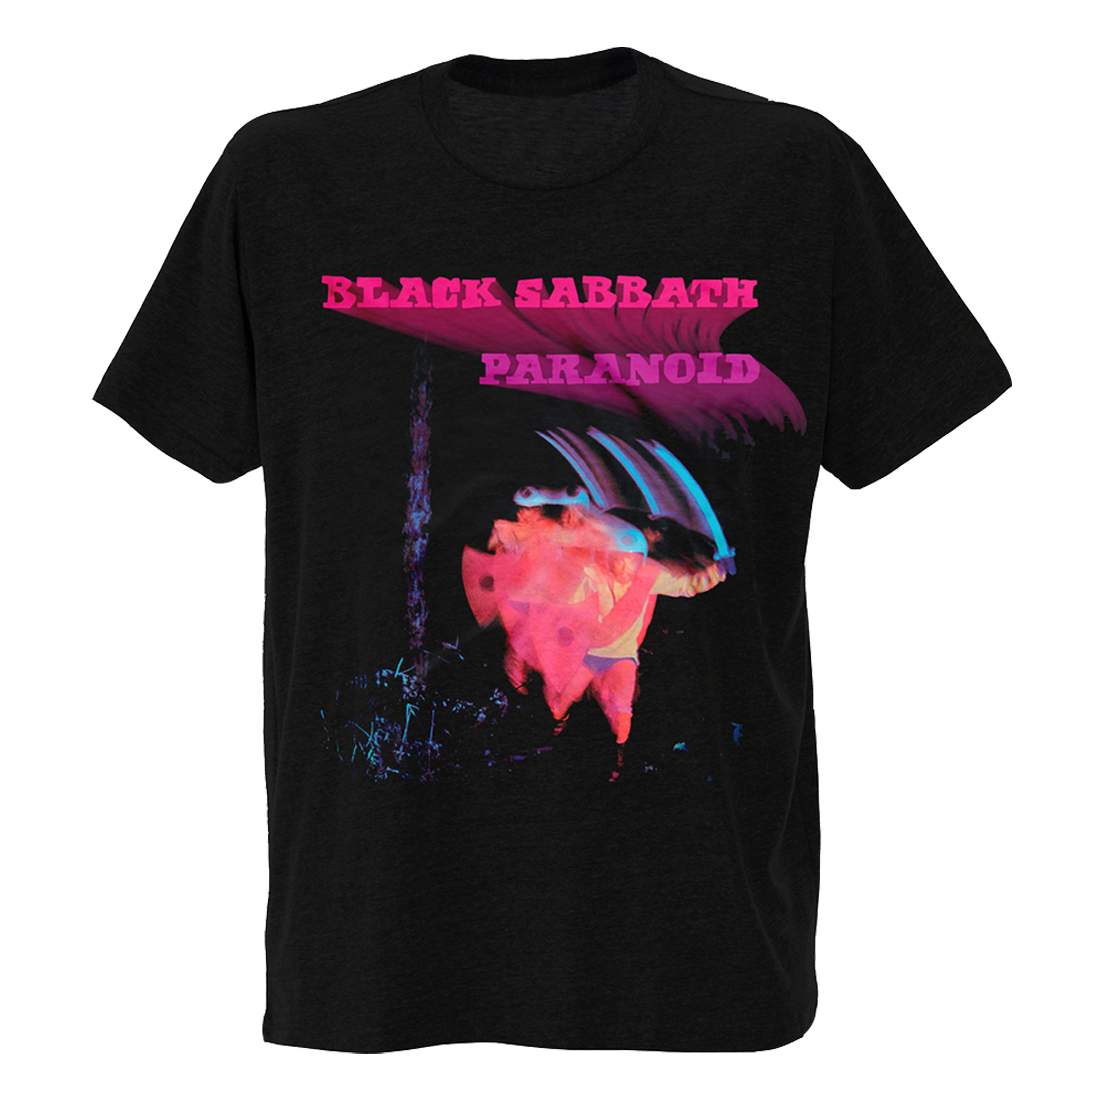 Paranoid T-Shirt